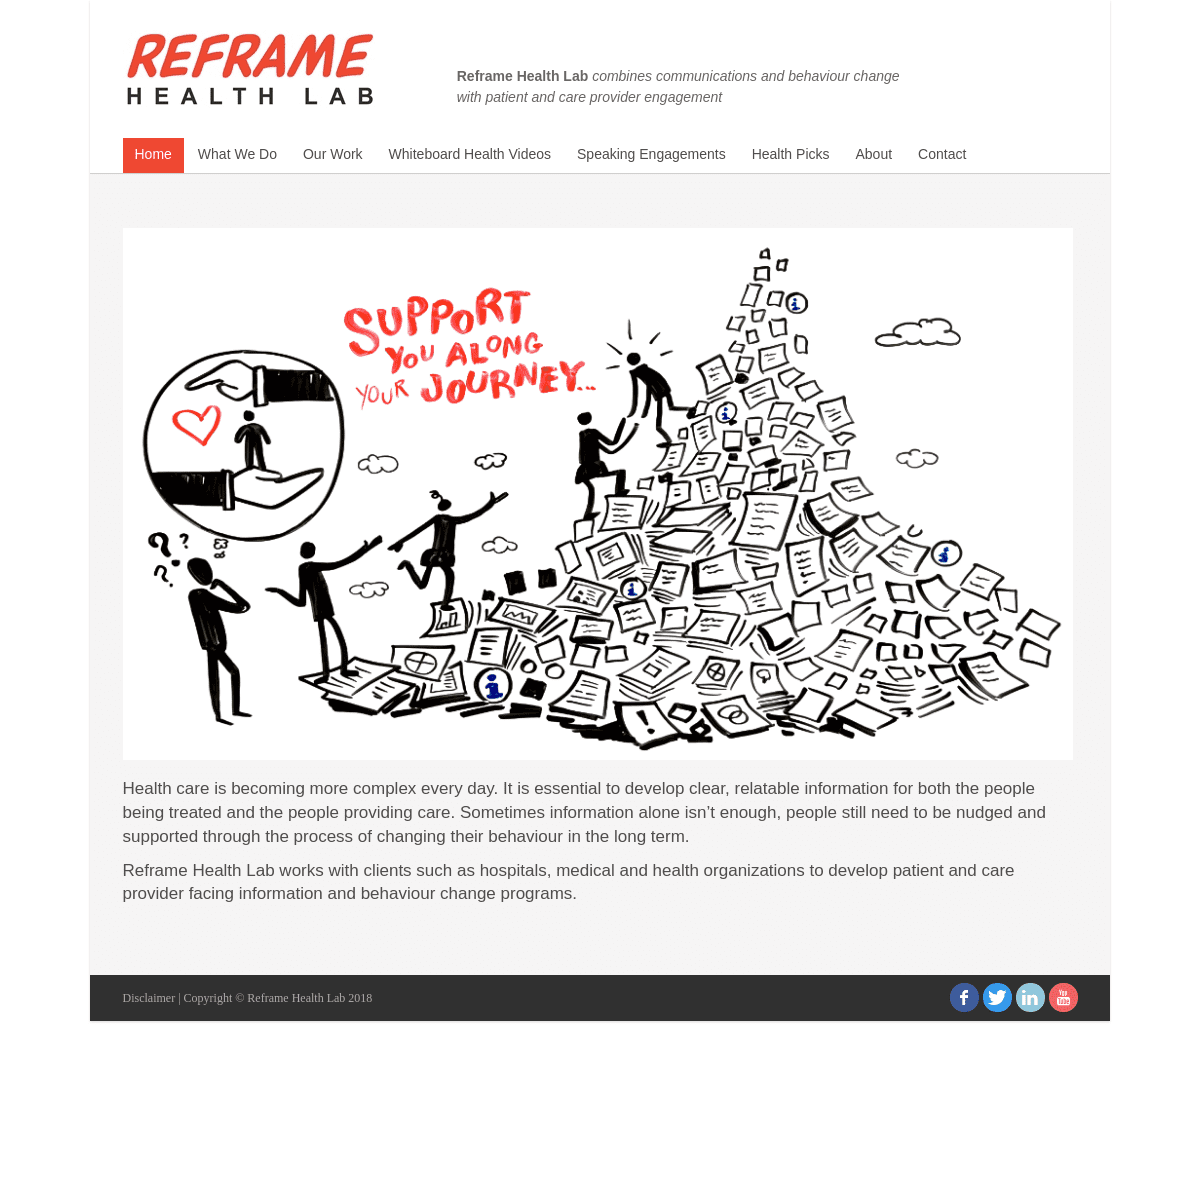 A complete backup of reframehealthlab.com